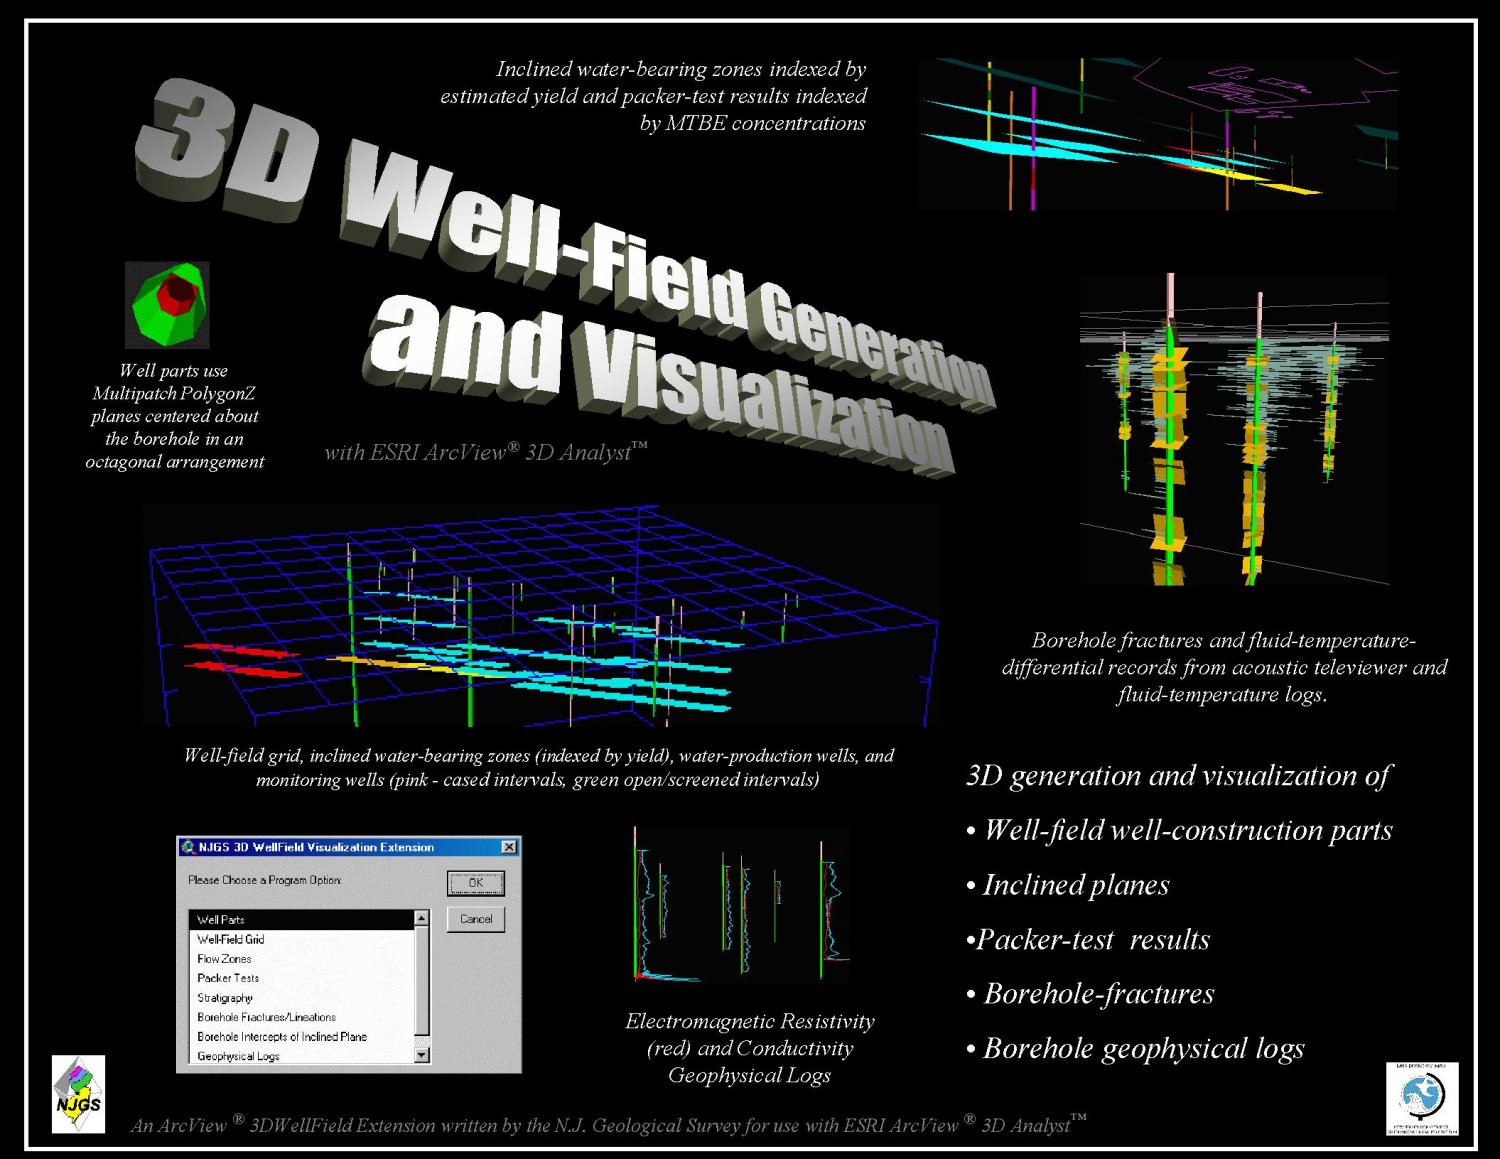 3D Wellfield Generation & Visualization poster